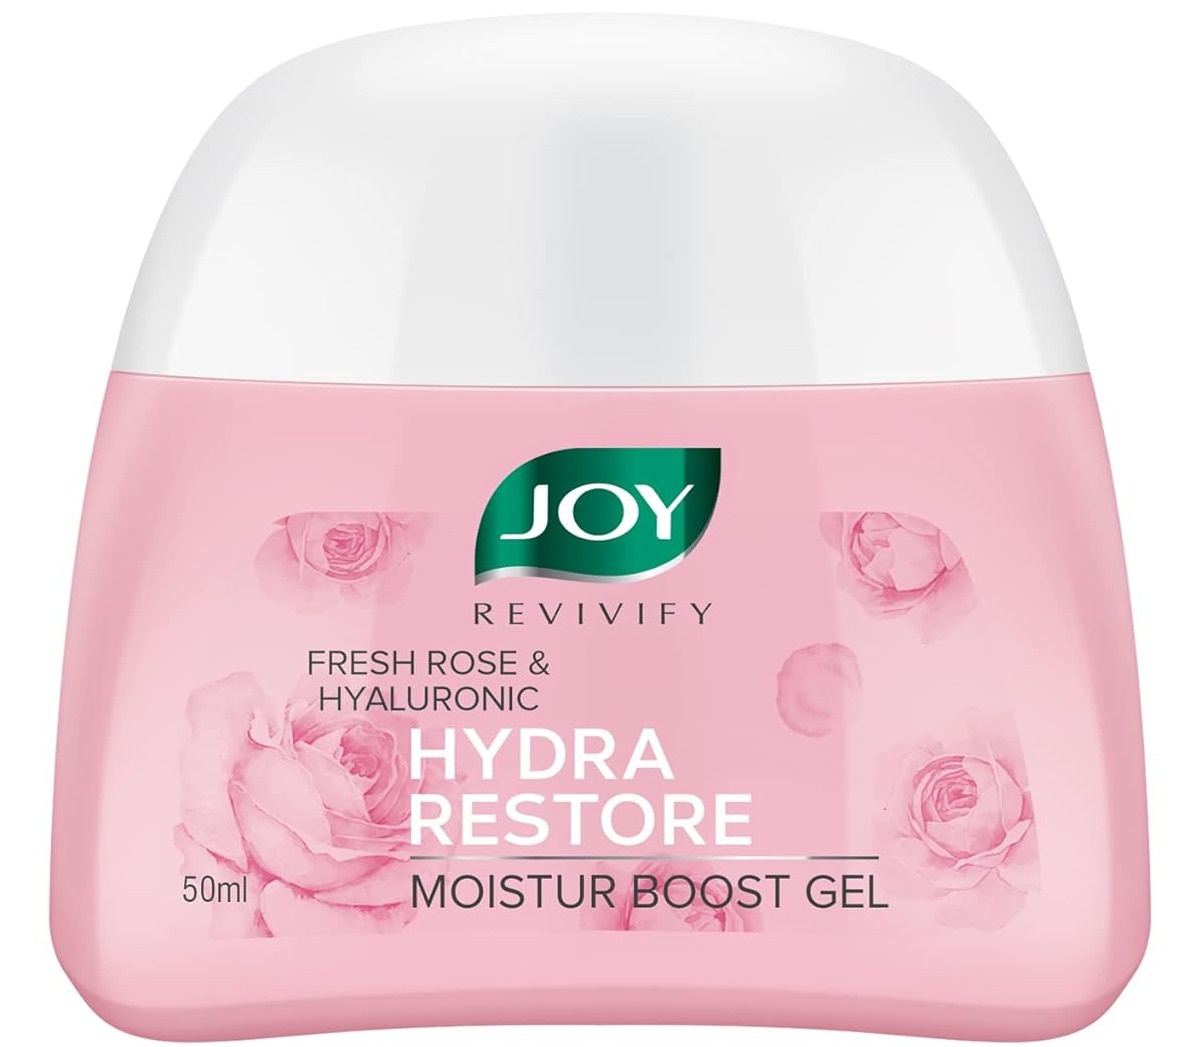 Joy Revivify Fresh Rose & Hyaluronic Hydra Restore Moistur Boost Gel